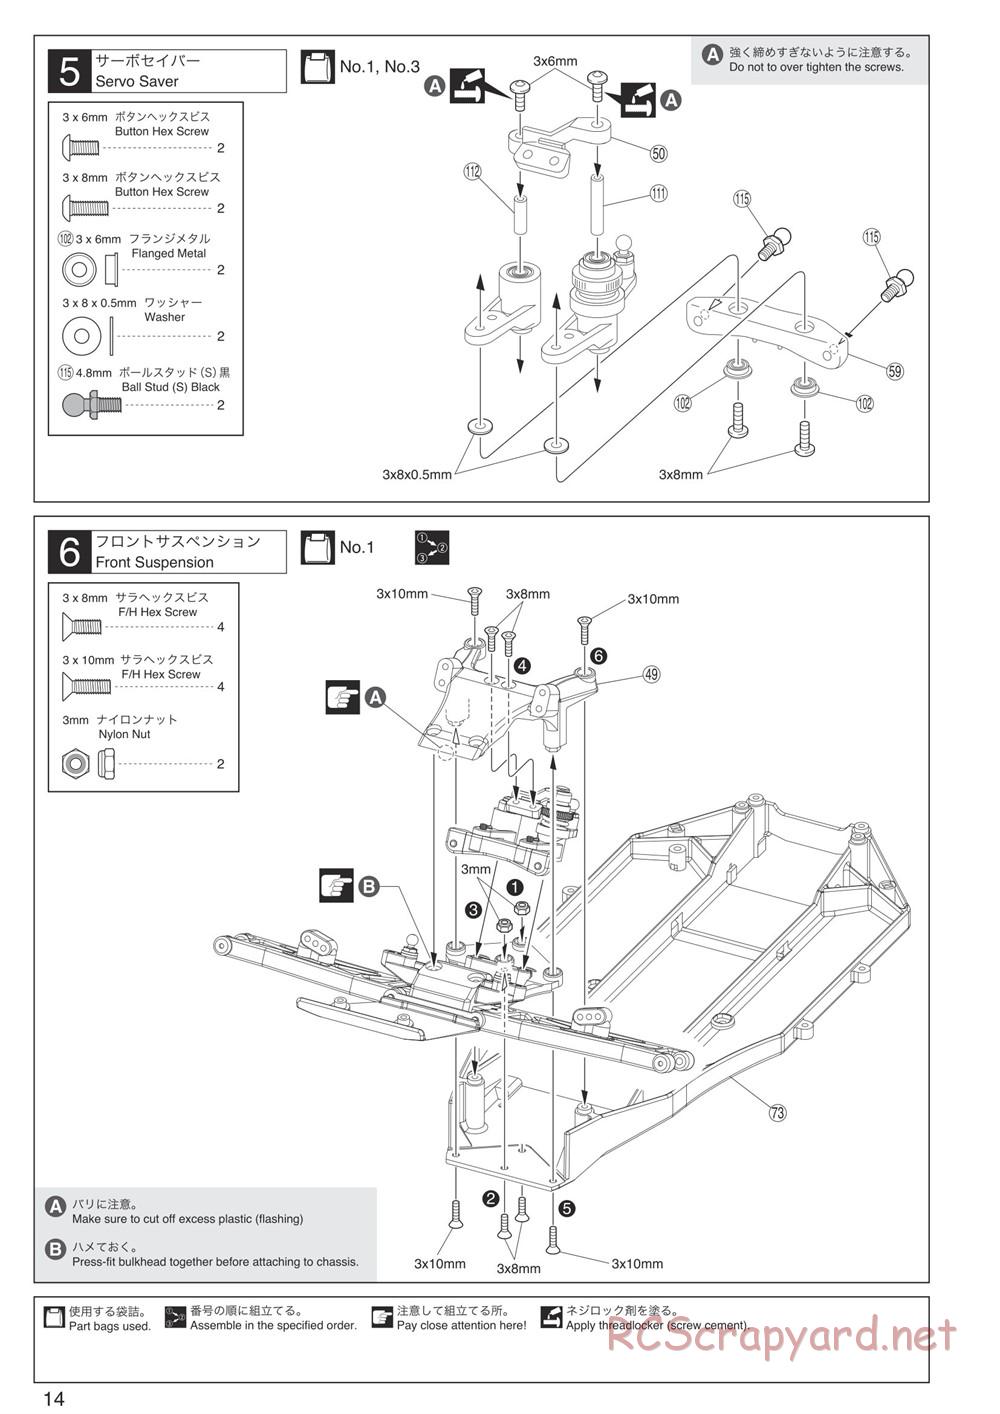 Kyosho - Ultima SCR - Manual - Page 14